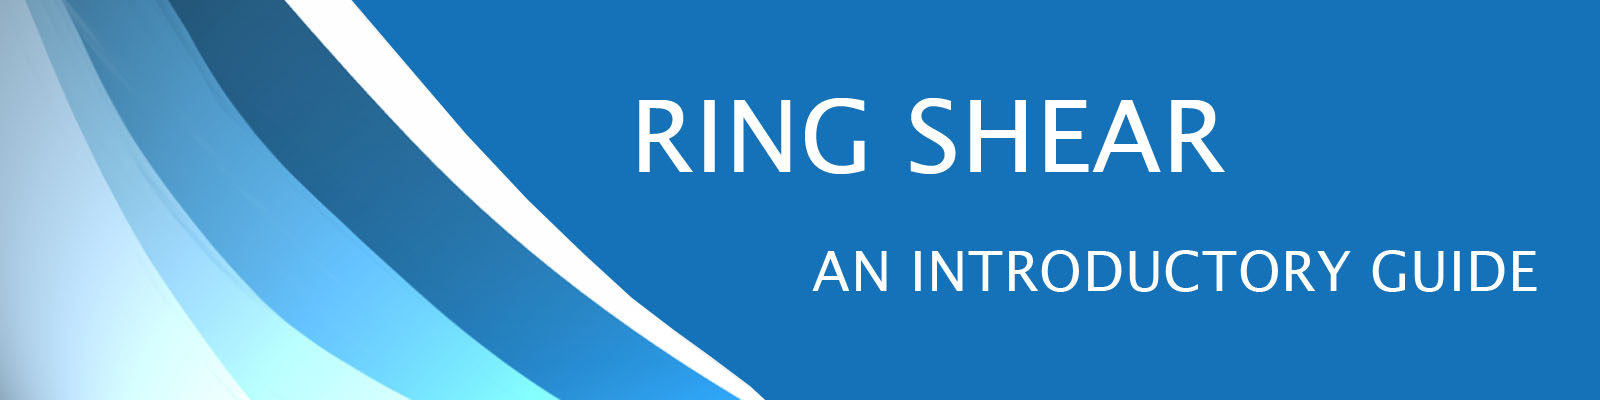 Ring Shear Information